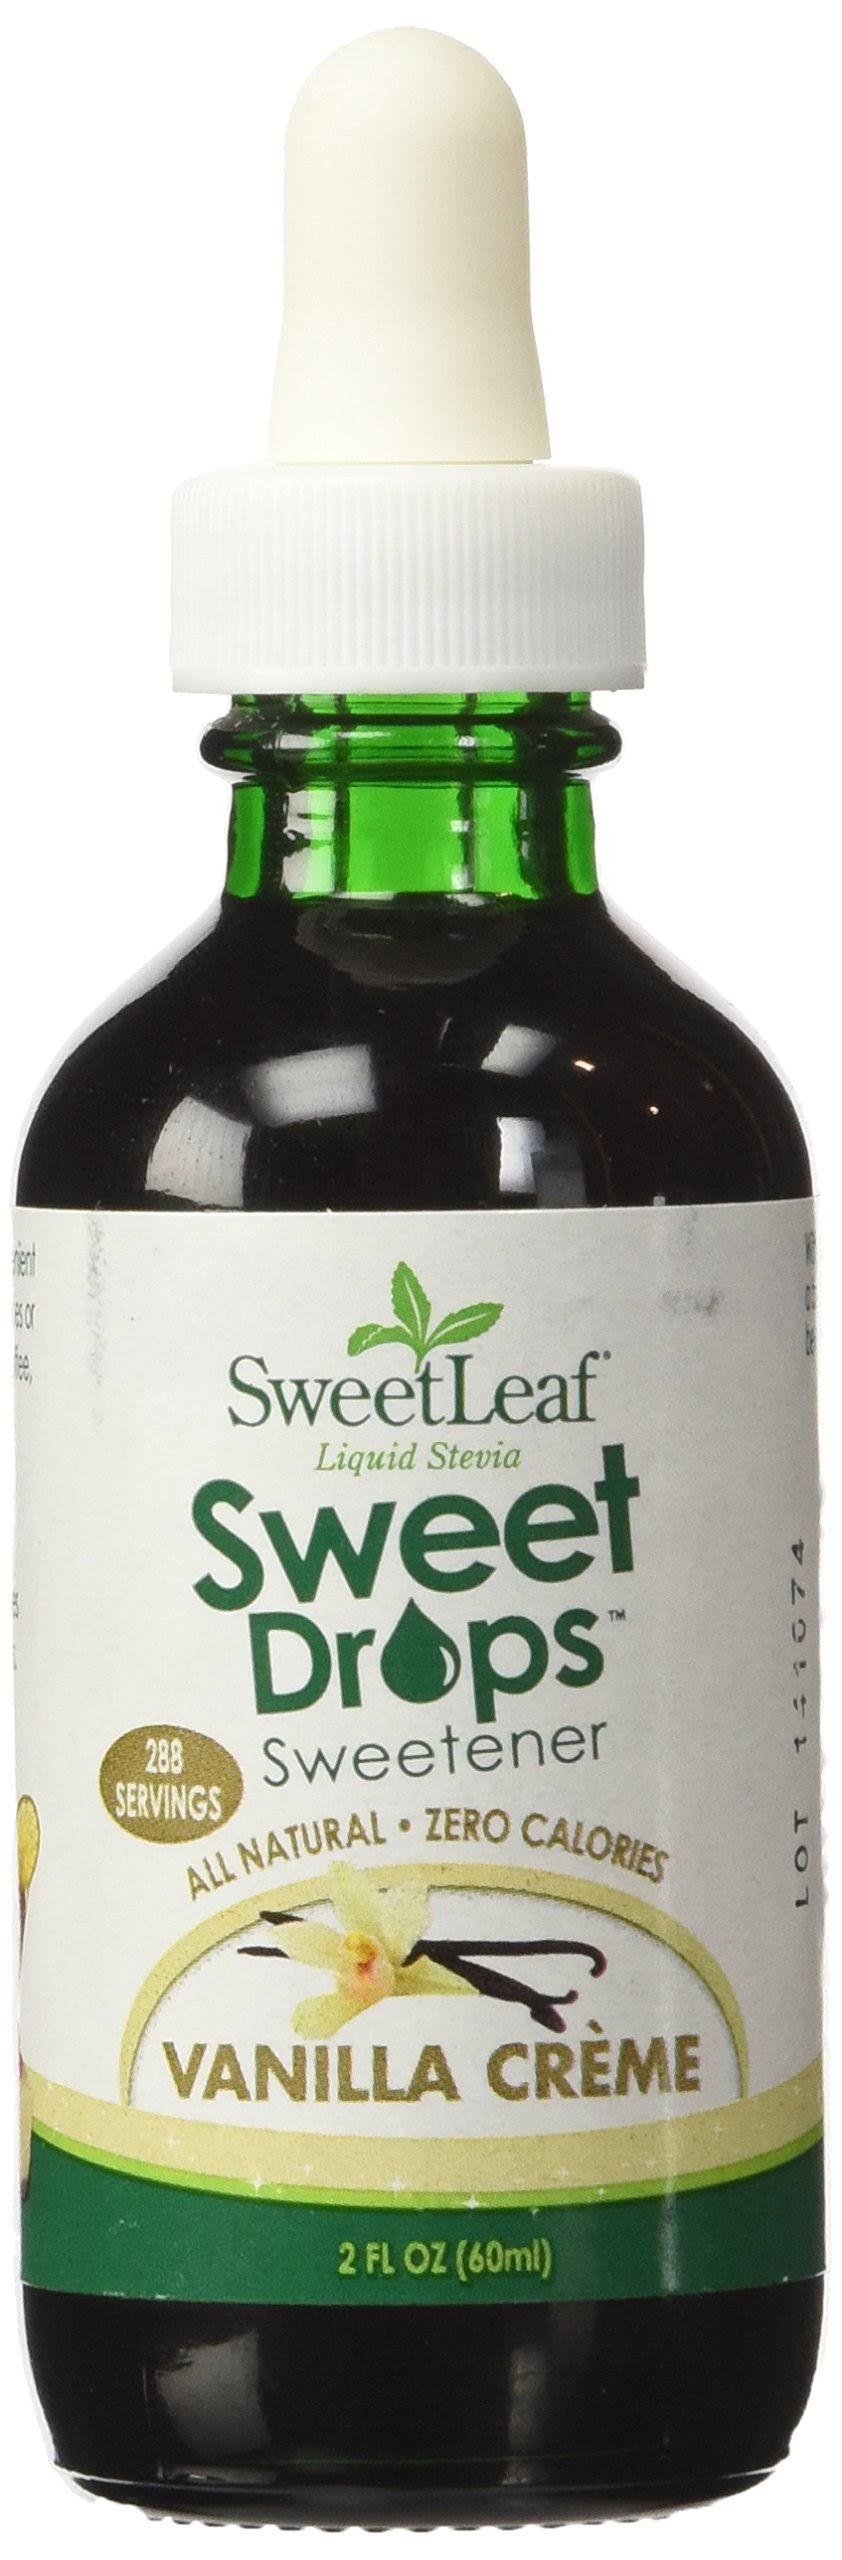 Sweetleaf Sweet Drops Liquid Stevia Vanilla Creme 2 FL oz